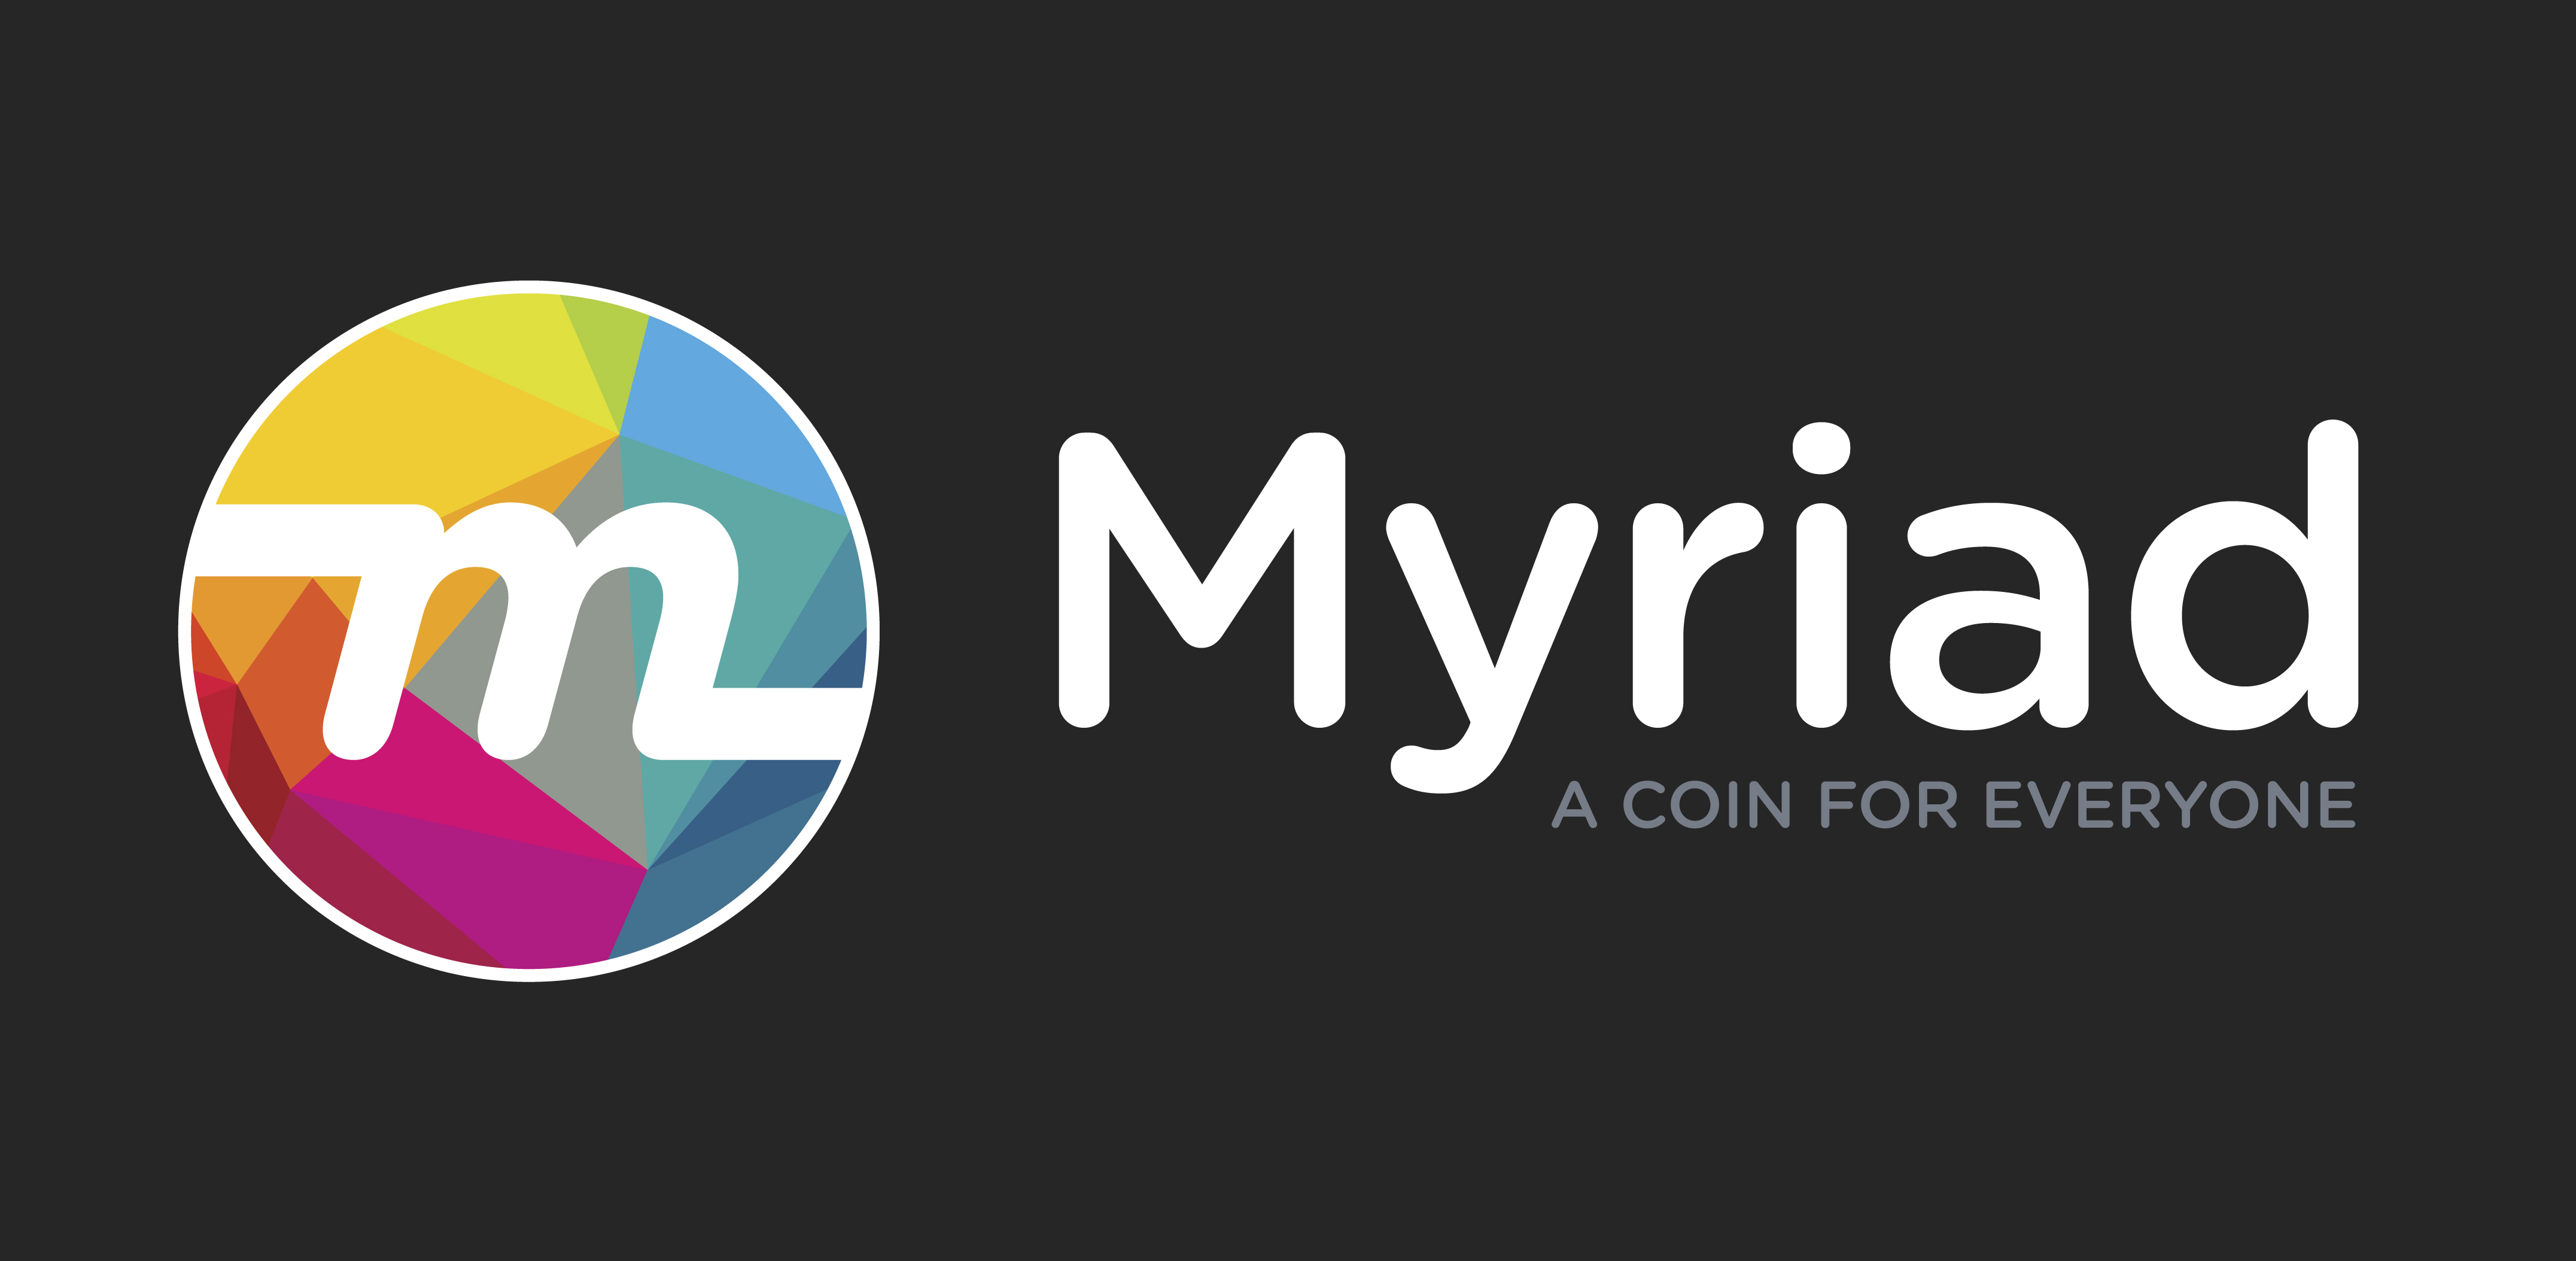 FREE Myriad Coin Sticker